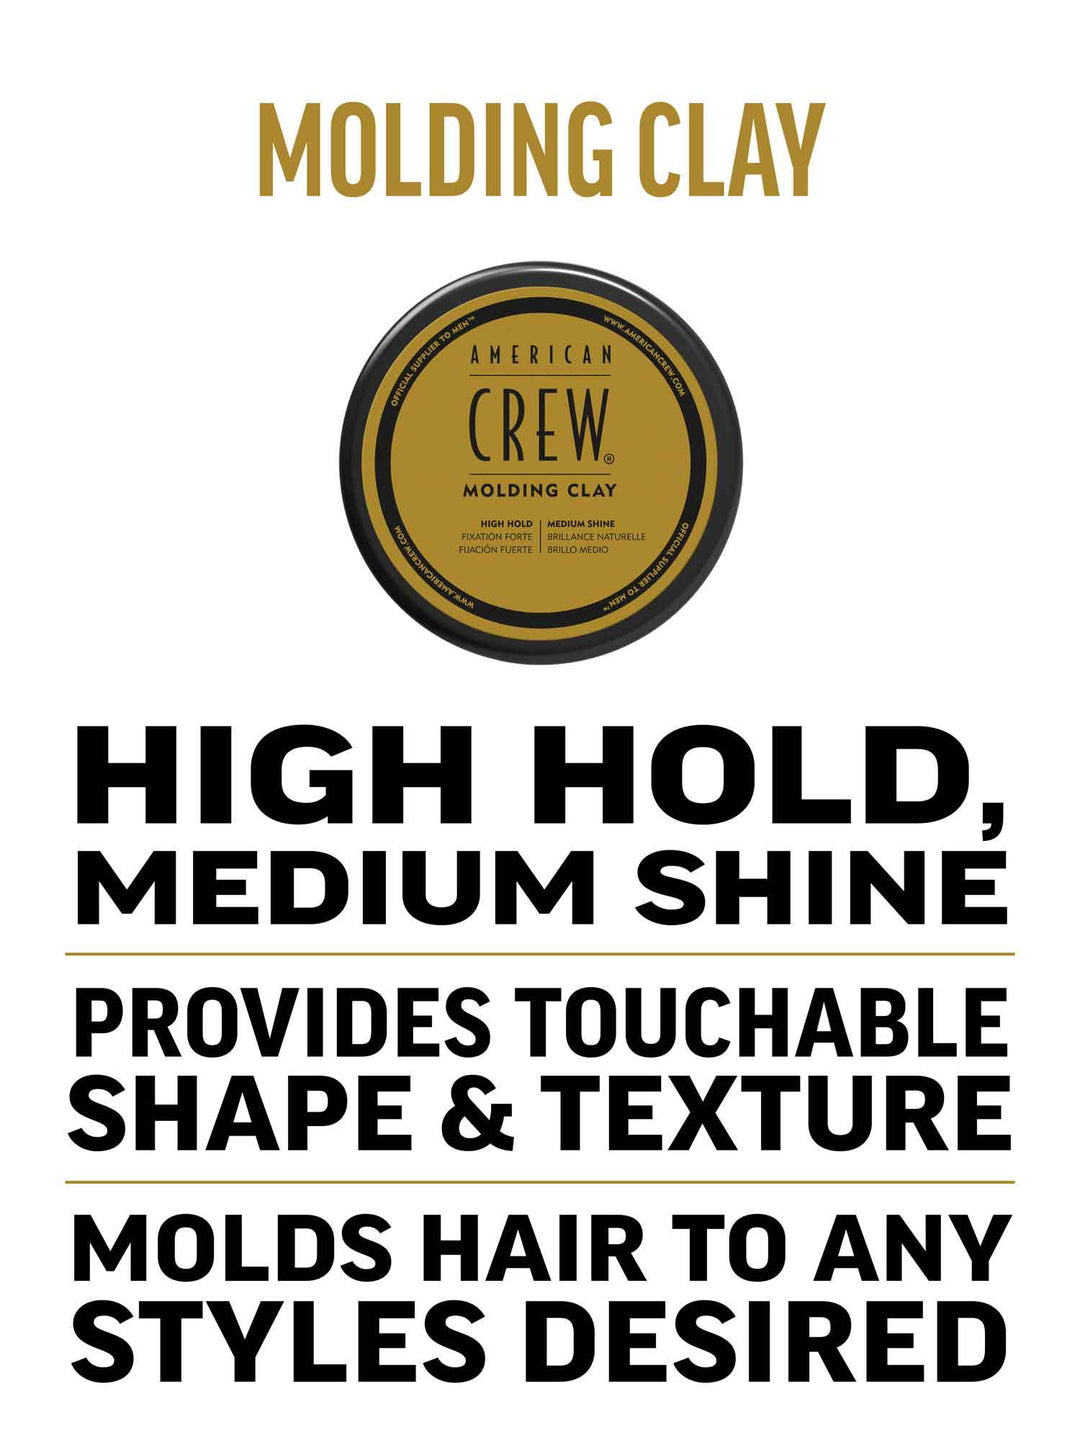 American Crew Molding Clay, High Hold, Medium Shine - 3 oz jar